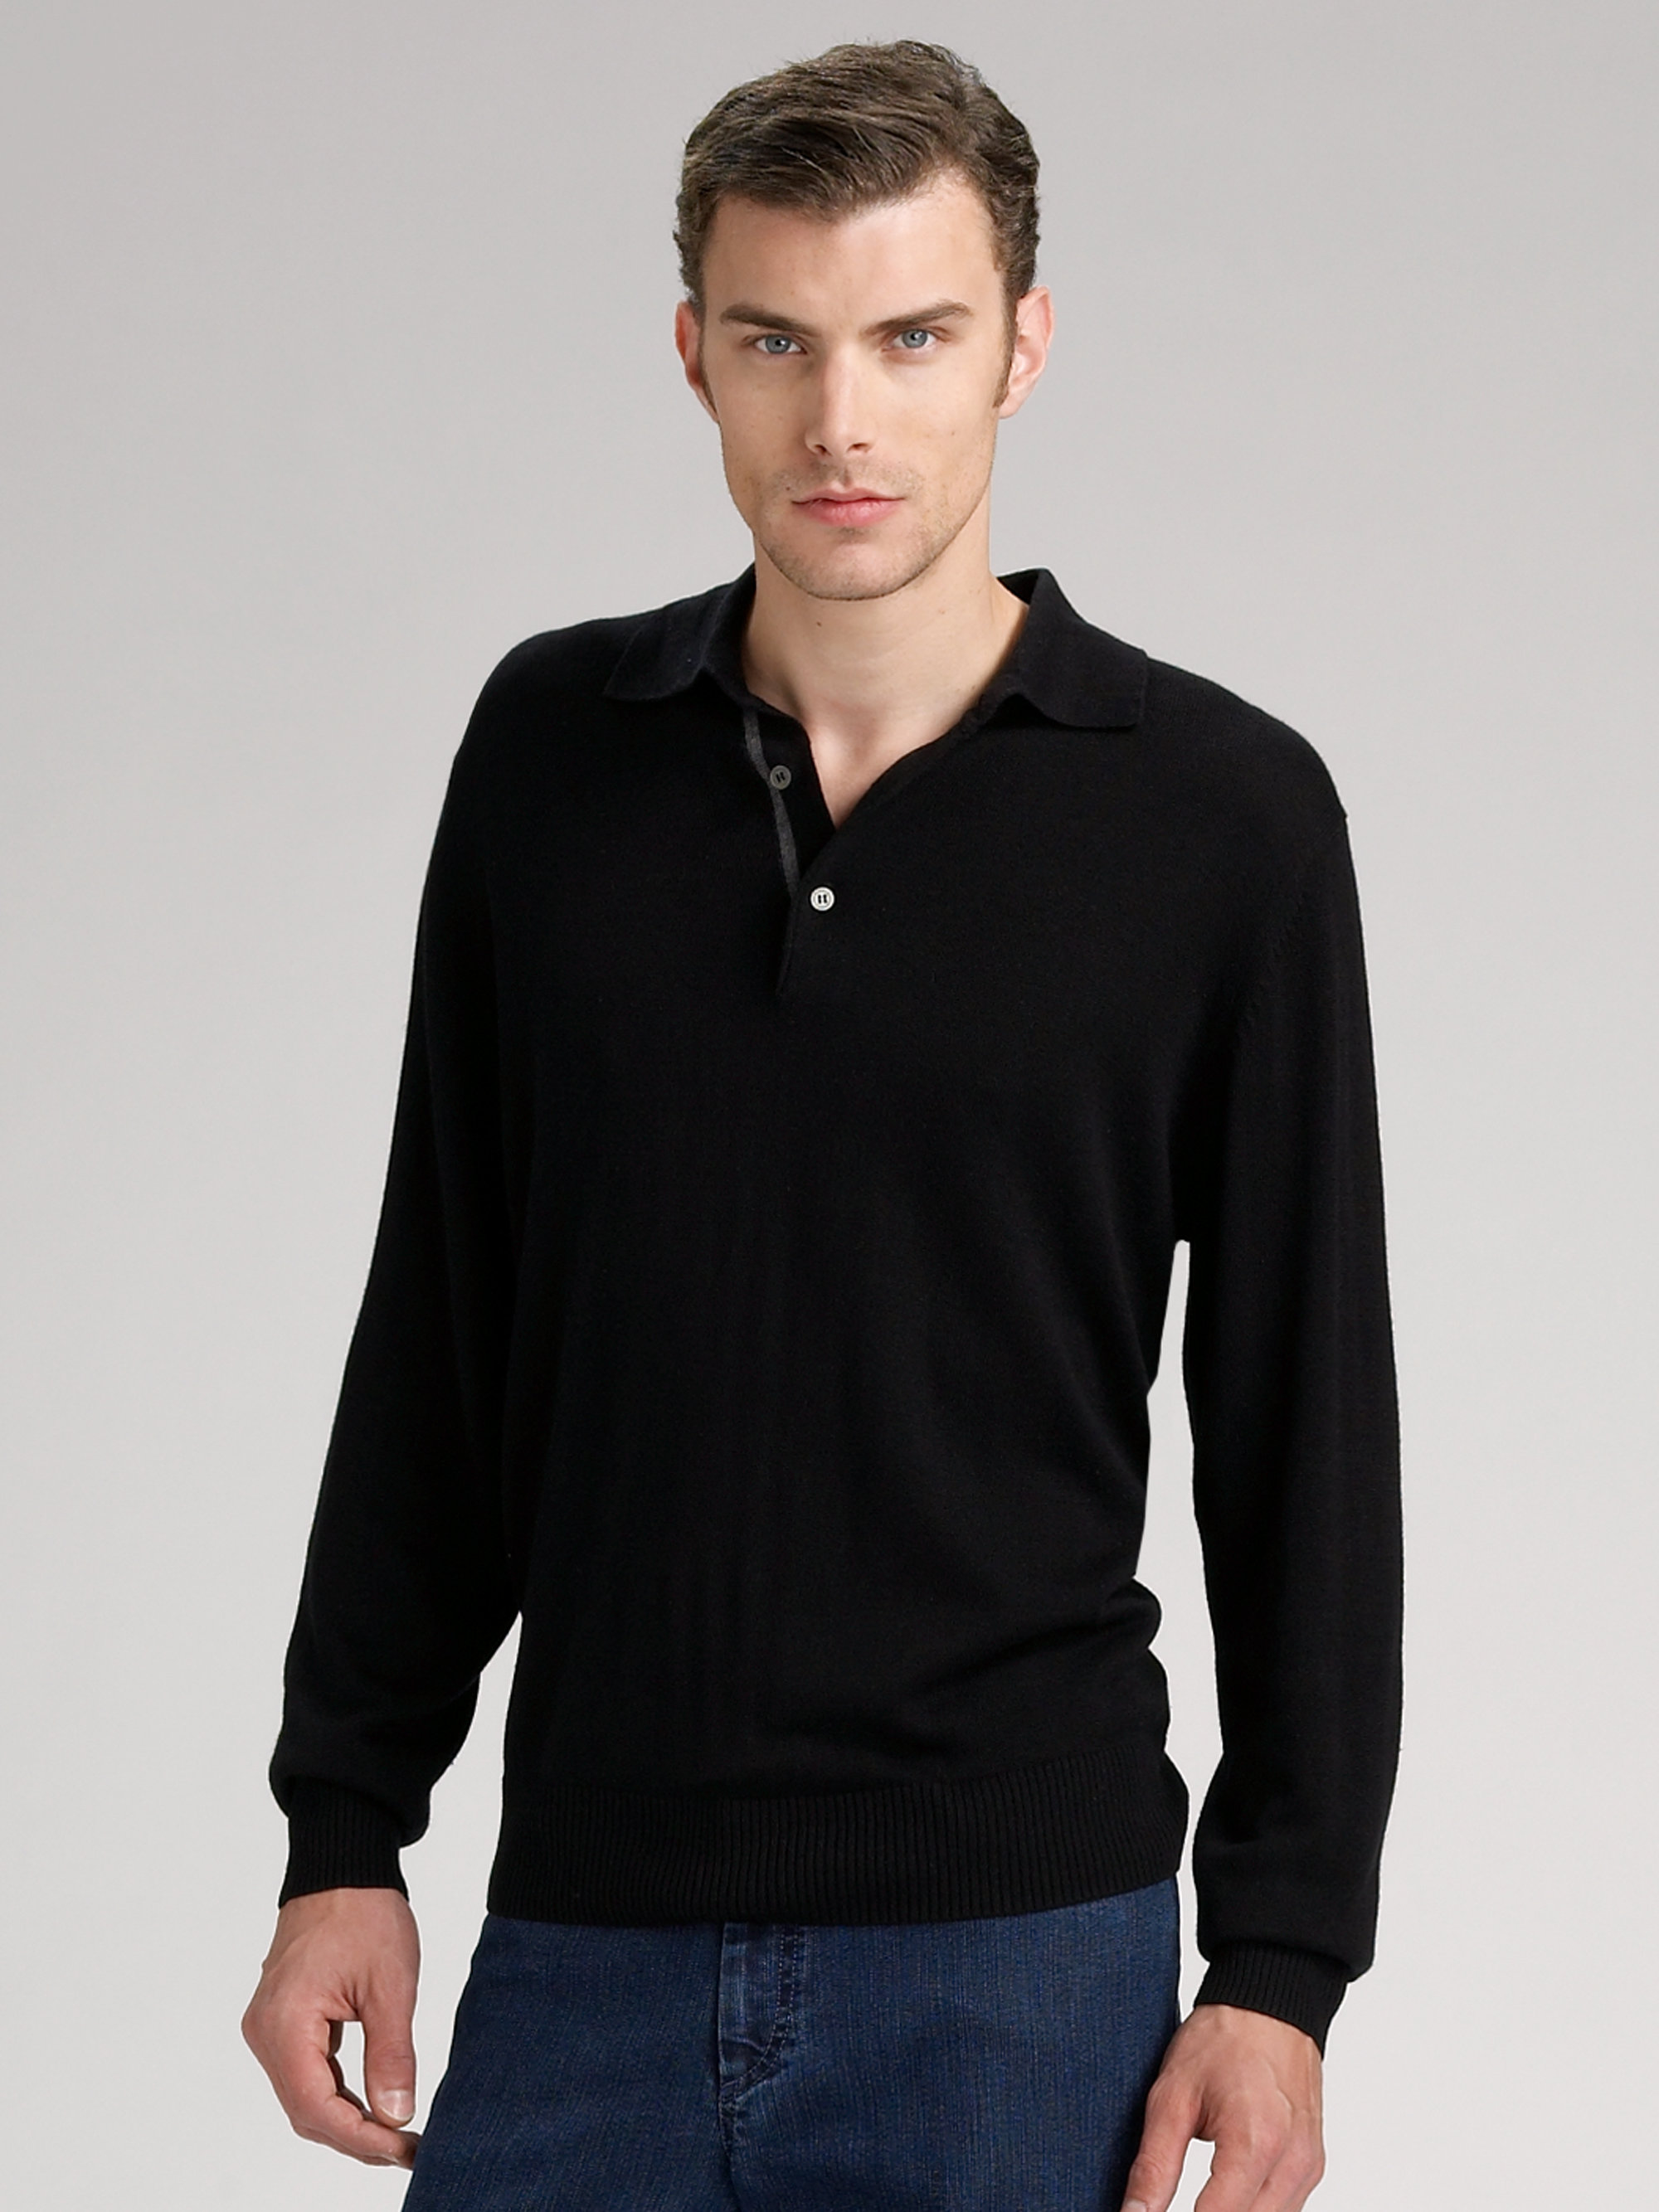 Joseph abboud Silkcashmere Polo Sweater in Black for Men | Lyst